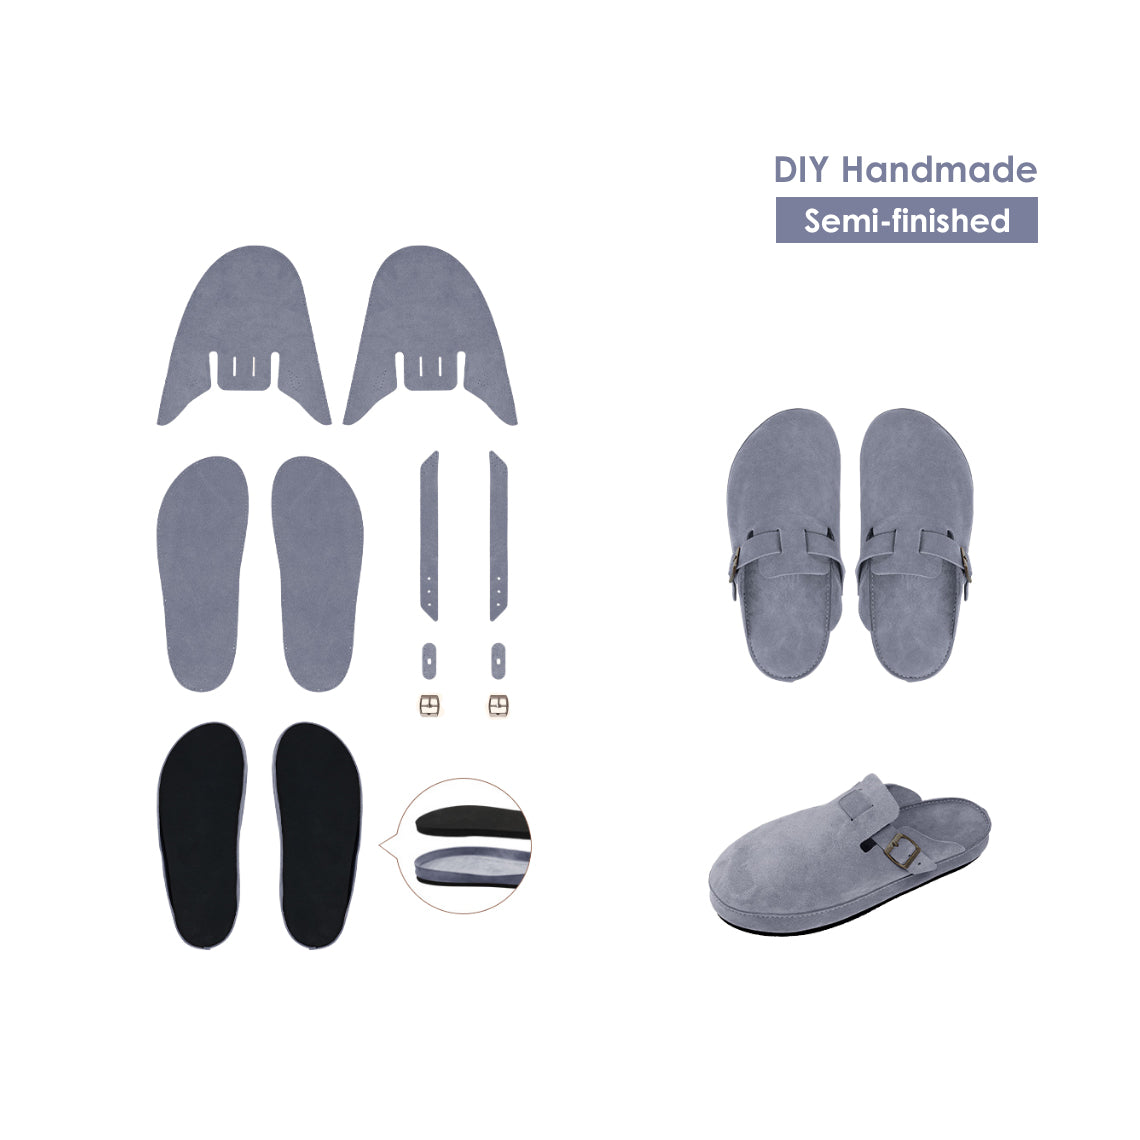 DIY Clog Making Kit | Handmade Leather Clog Slippers - POPSEWING®